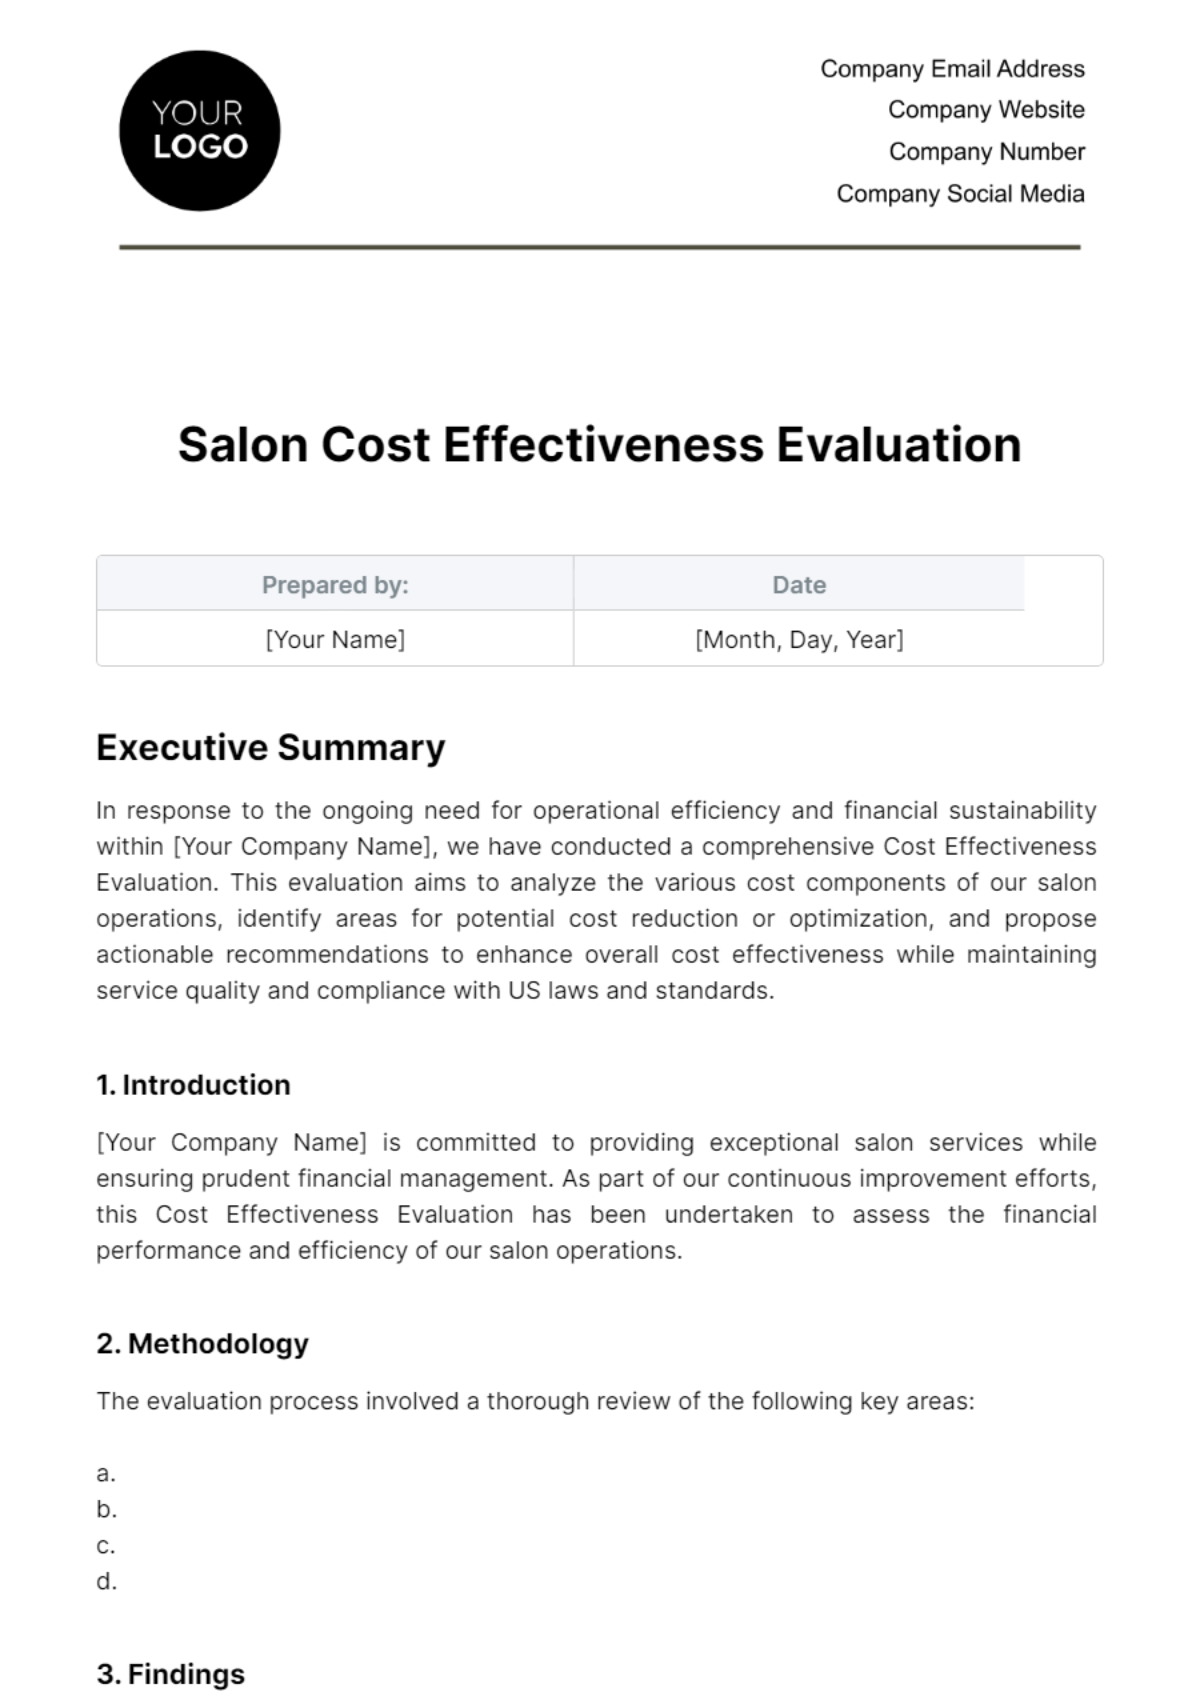 Salon Cost Effectiveness Evaluation Template